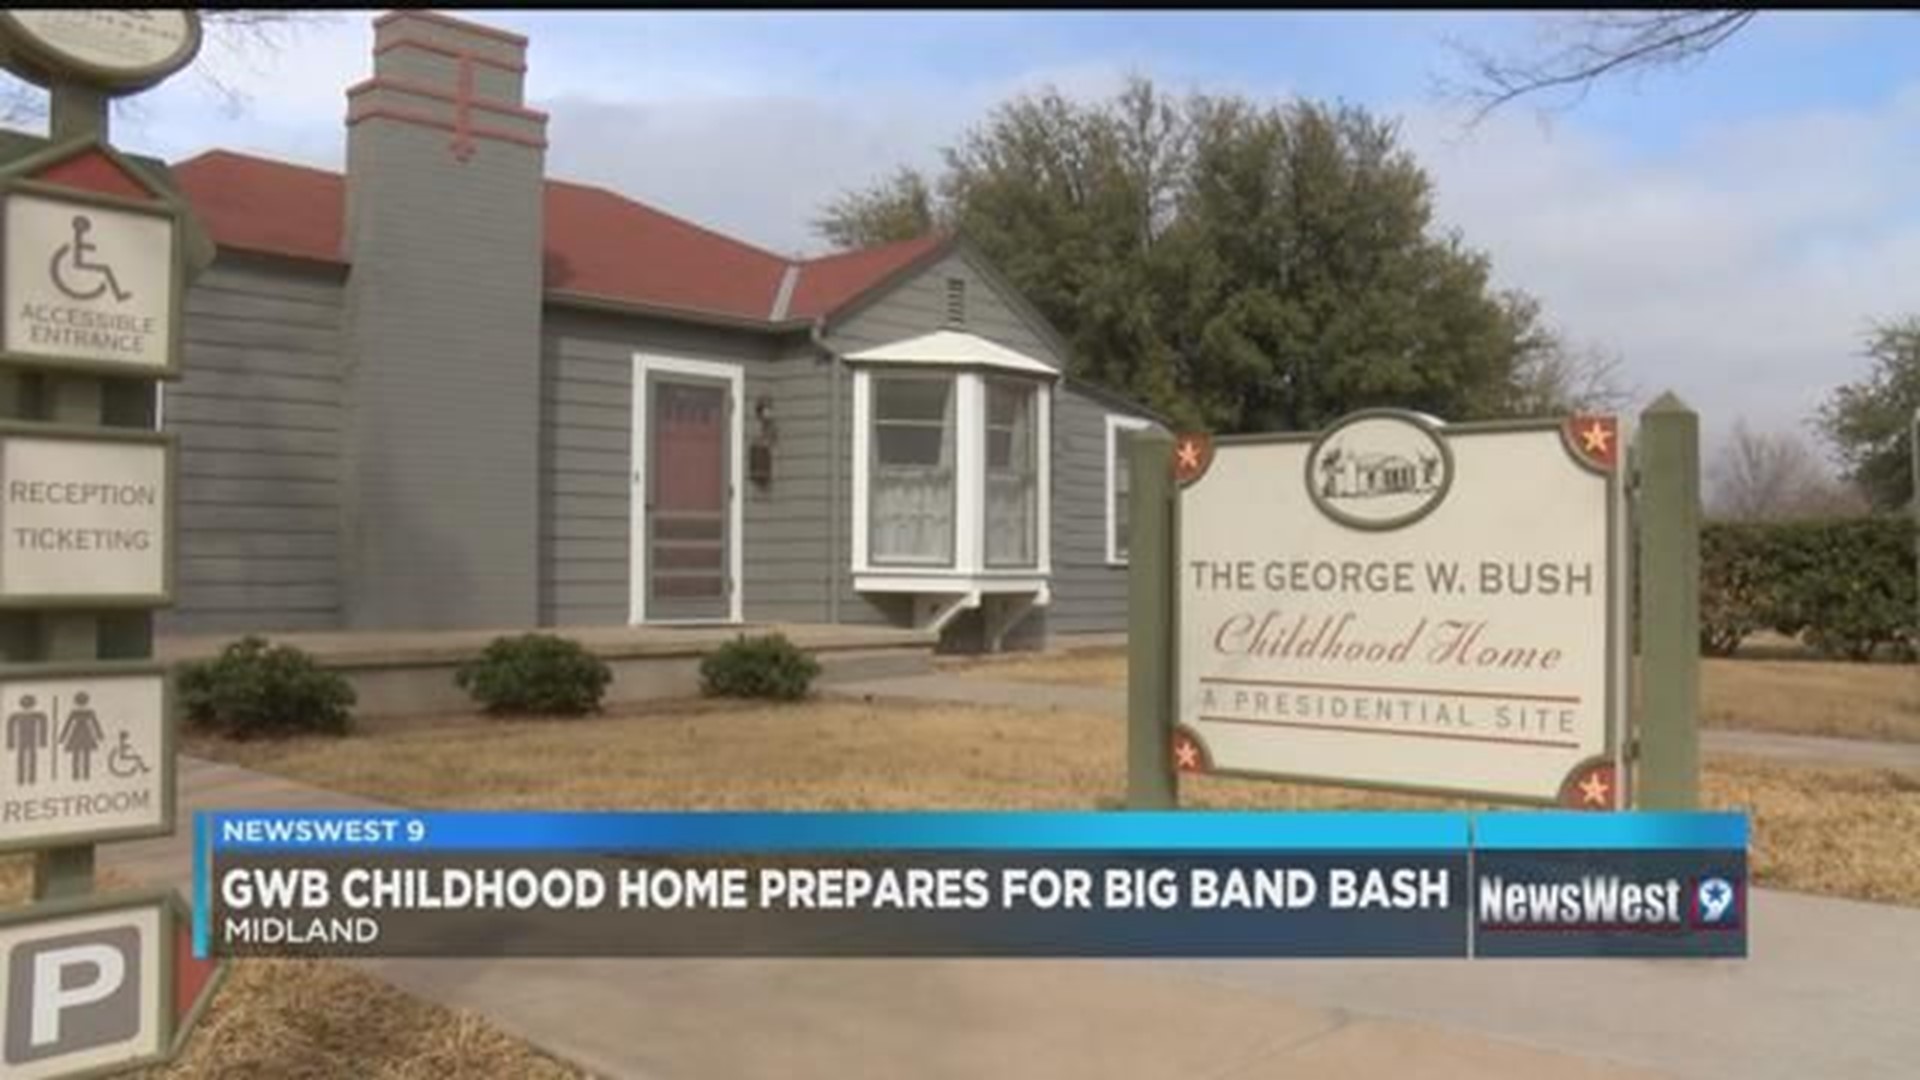 George W. Bush Childhood Home hosting Big Band Bash